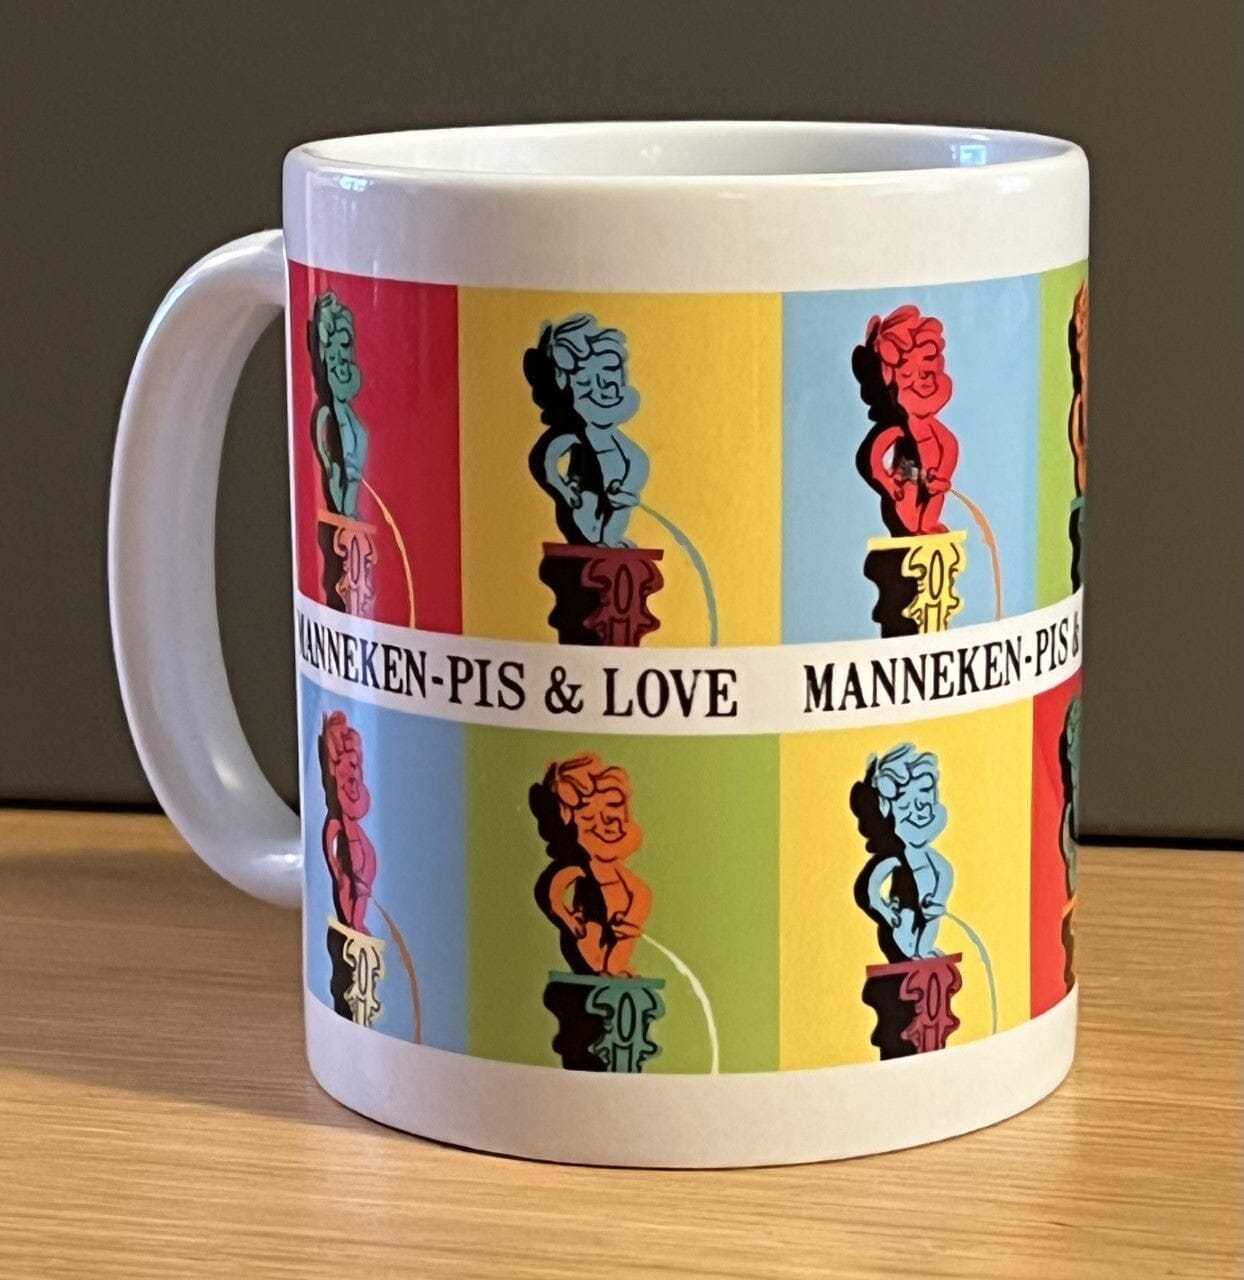 Manneken-Pis & Love - Mug La Minute Belge 